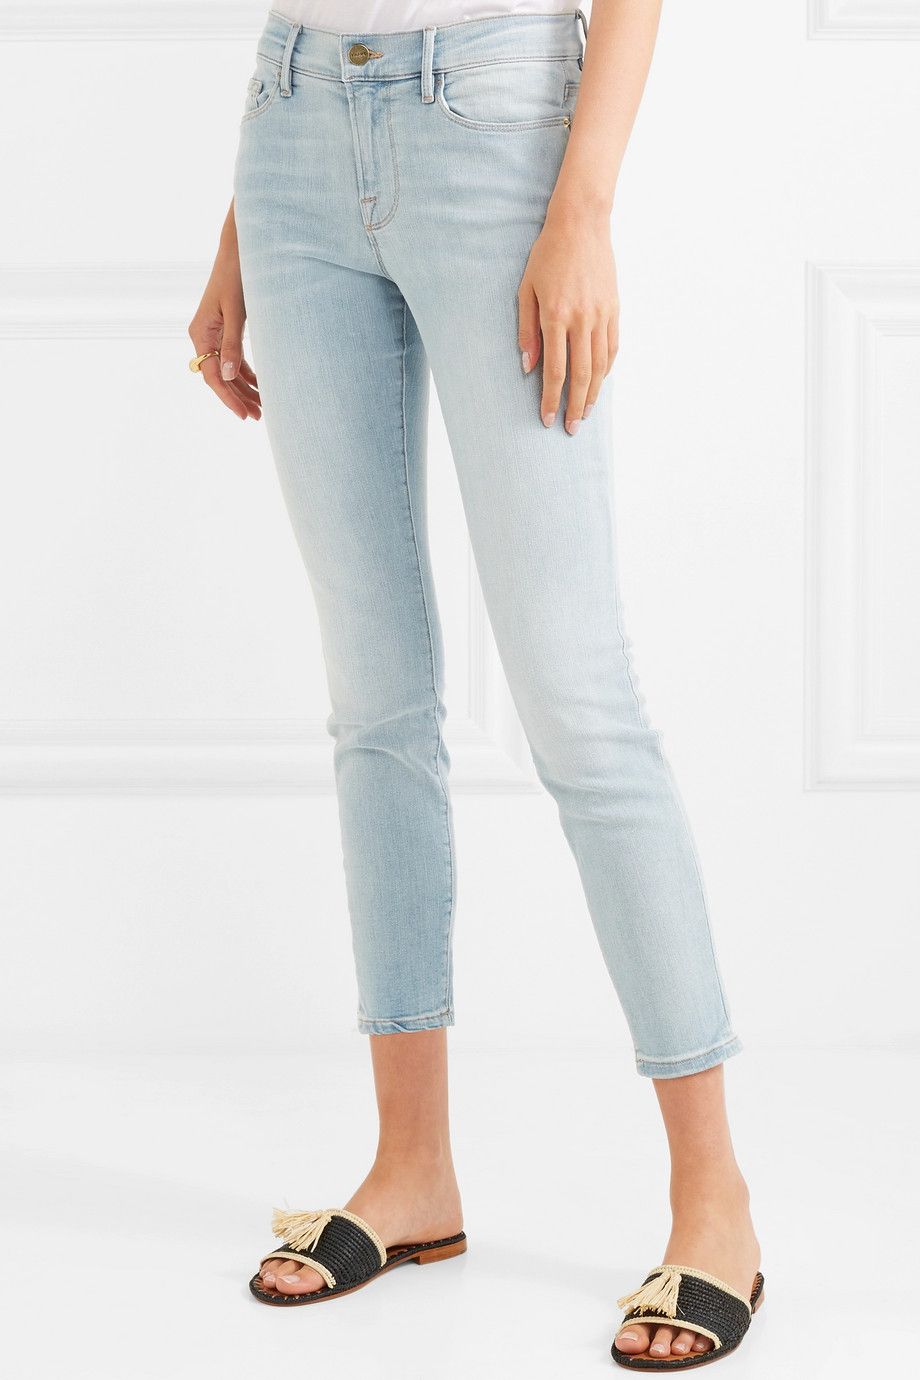 Julia Roberts Wearing Skinny Jeans | Who What Wear